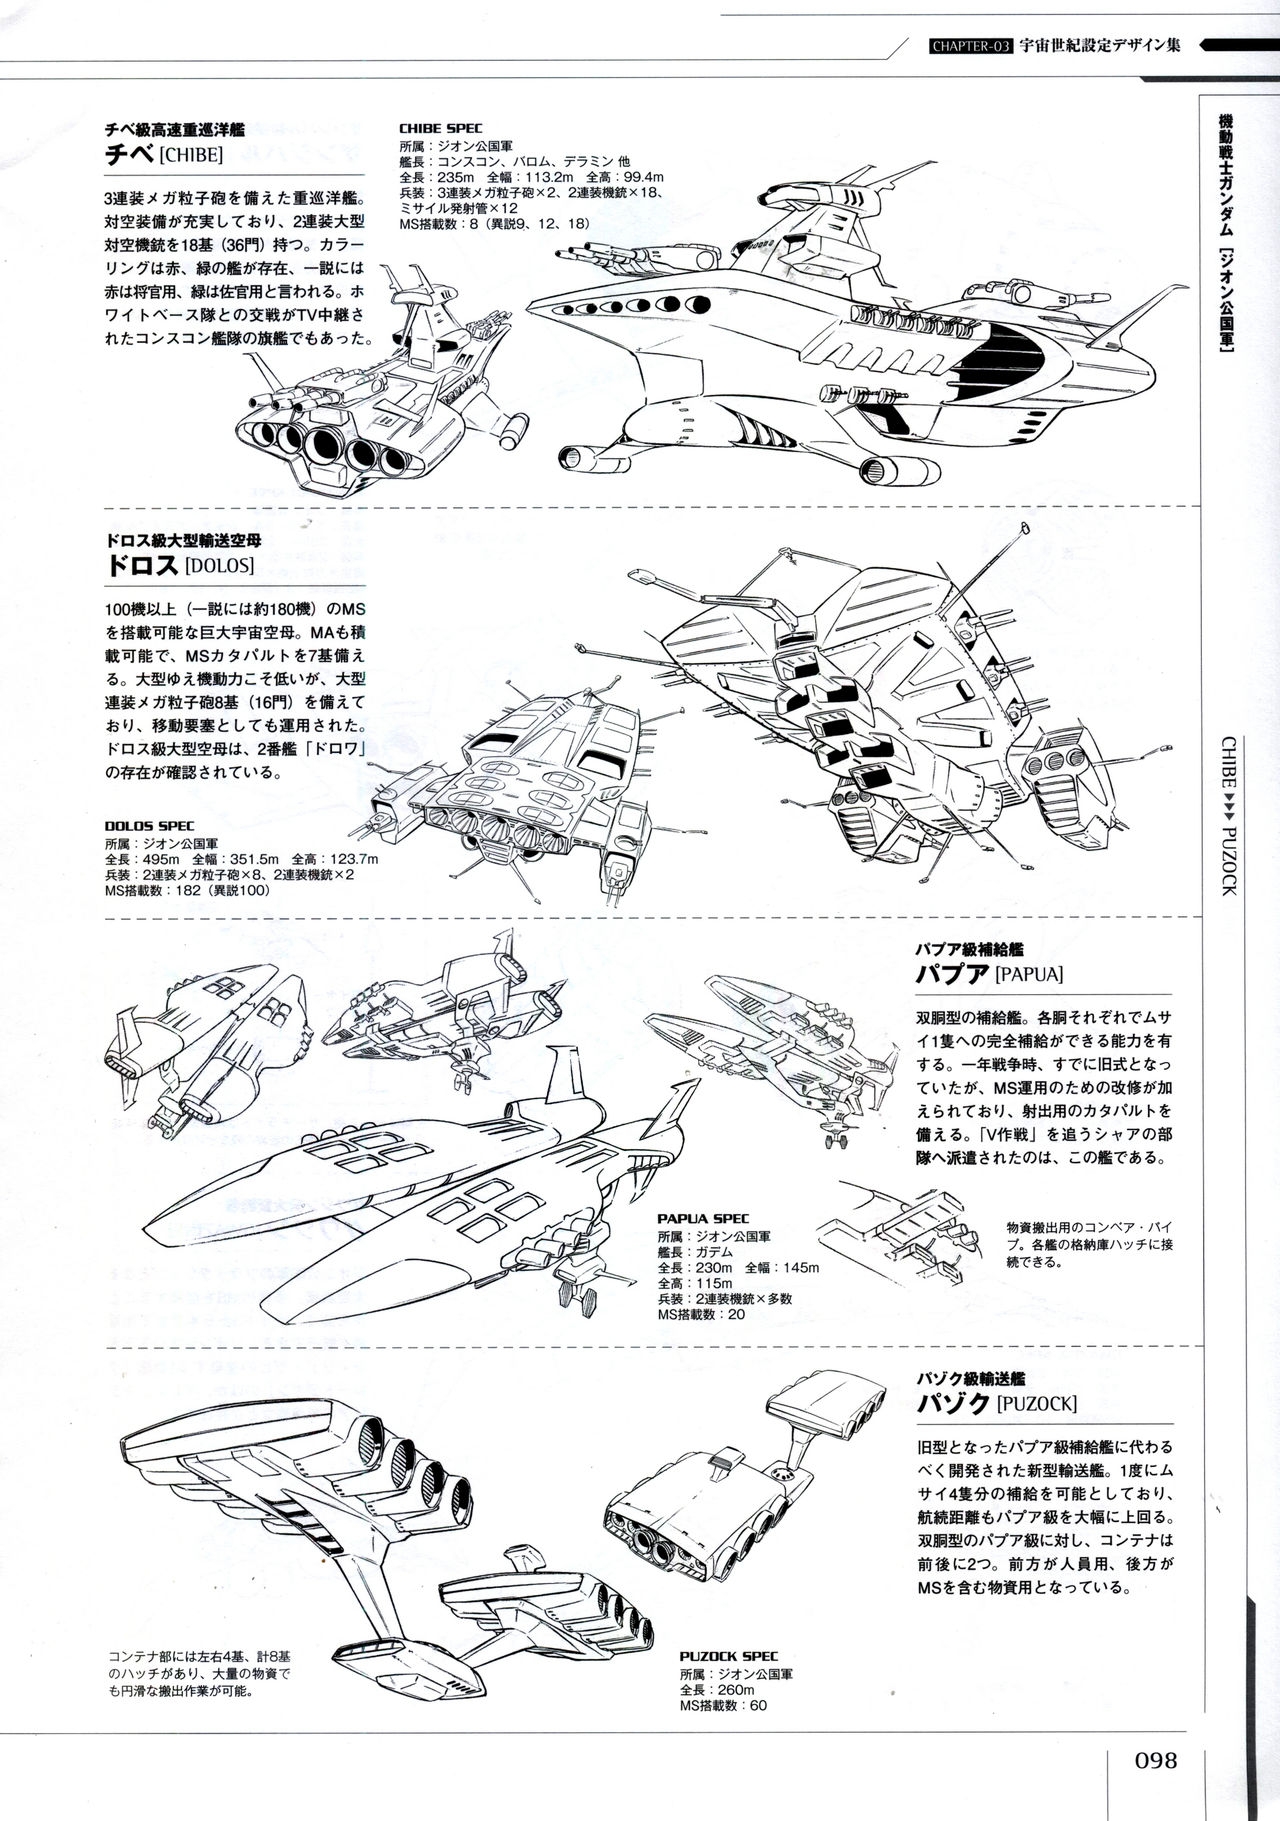 Mobile Suit Gundam - Ship & Aerospace Plane Encyclopedia - Revised Edition 103